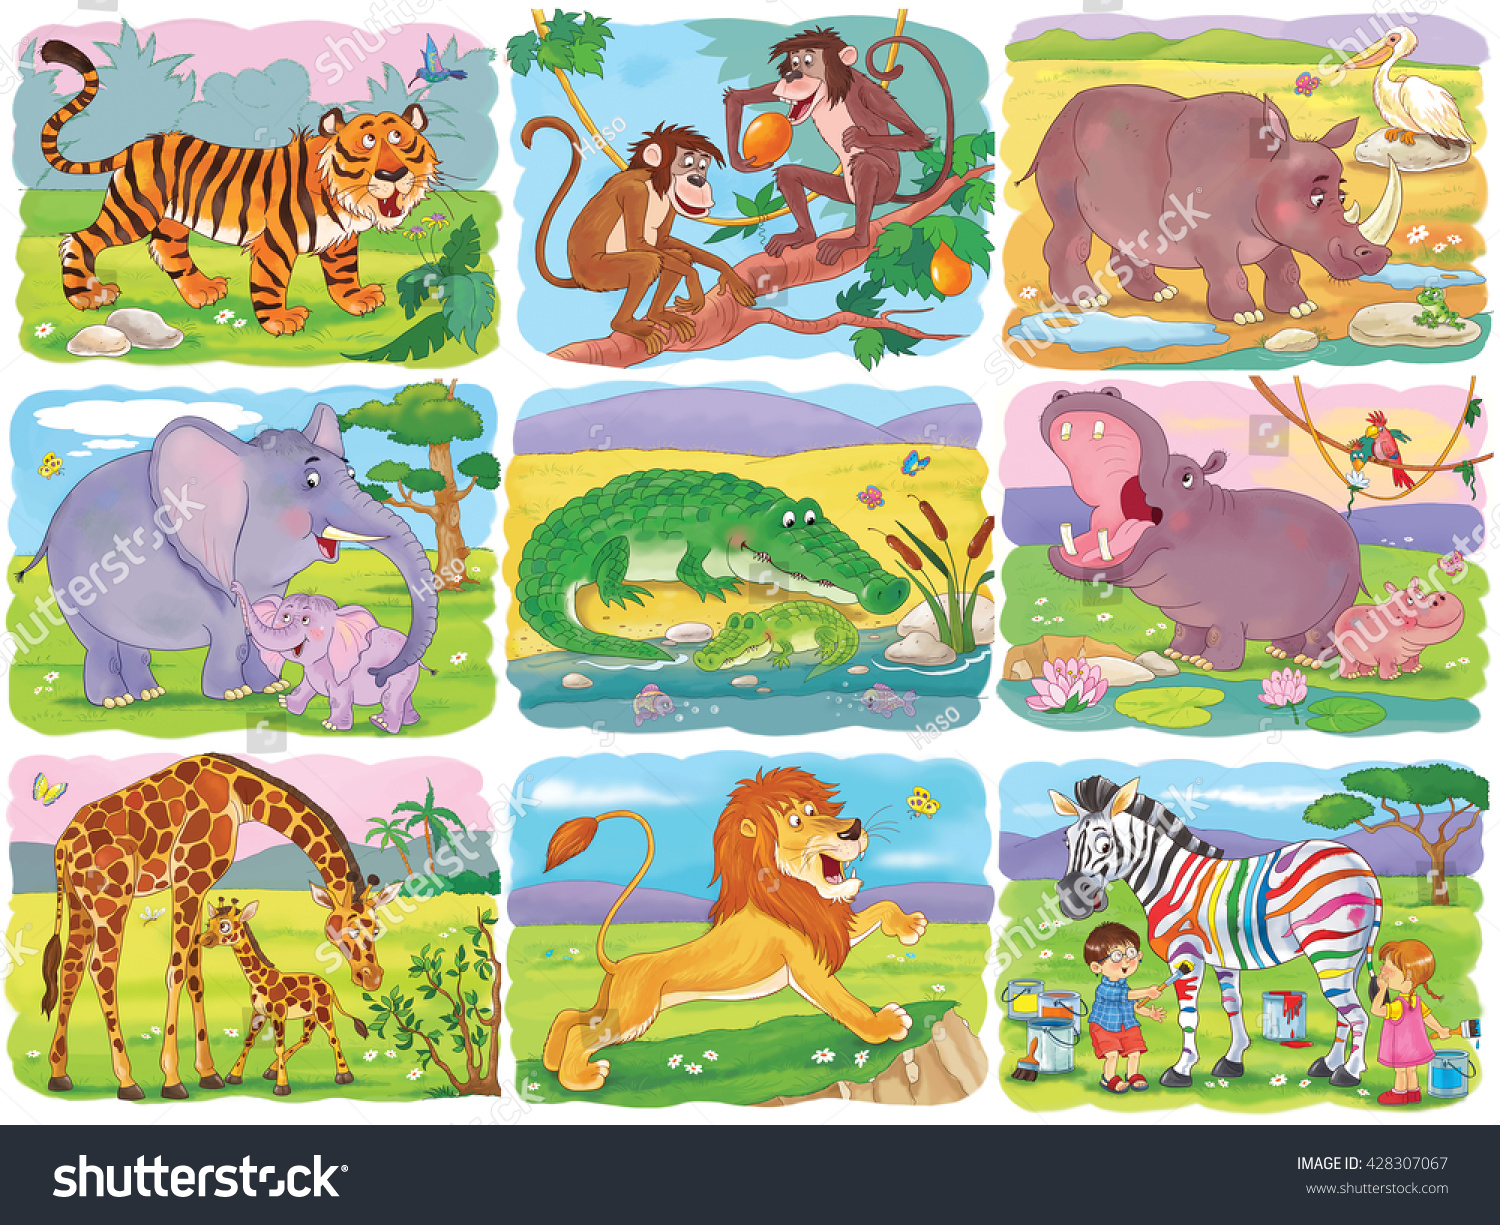 Тигр лев жираф слон. Лев Зебра Жираф и Бегемот. Слон Жираф обезьяна. Животные в зоопарке рисунки. Карточки животные зоопарка.